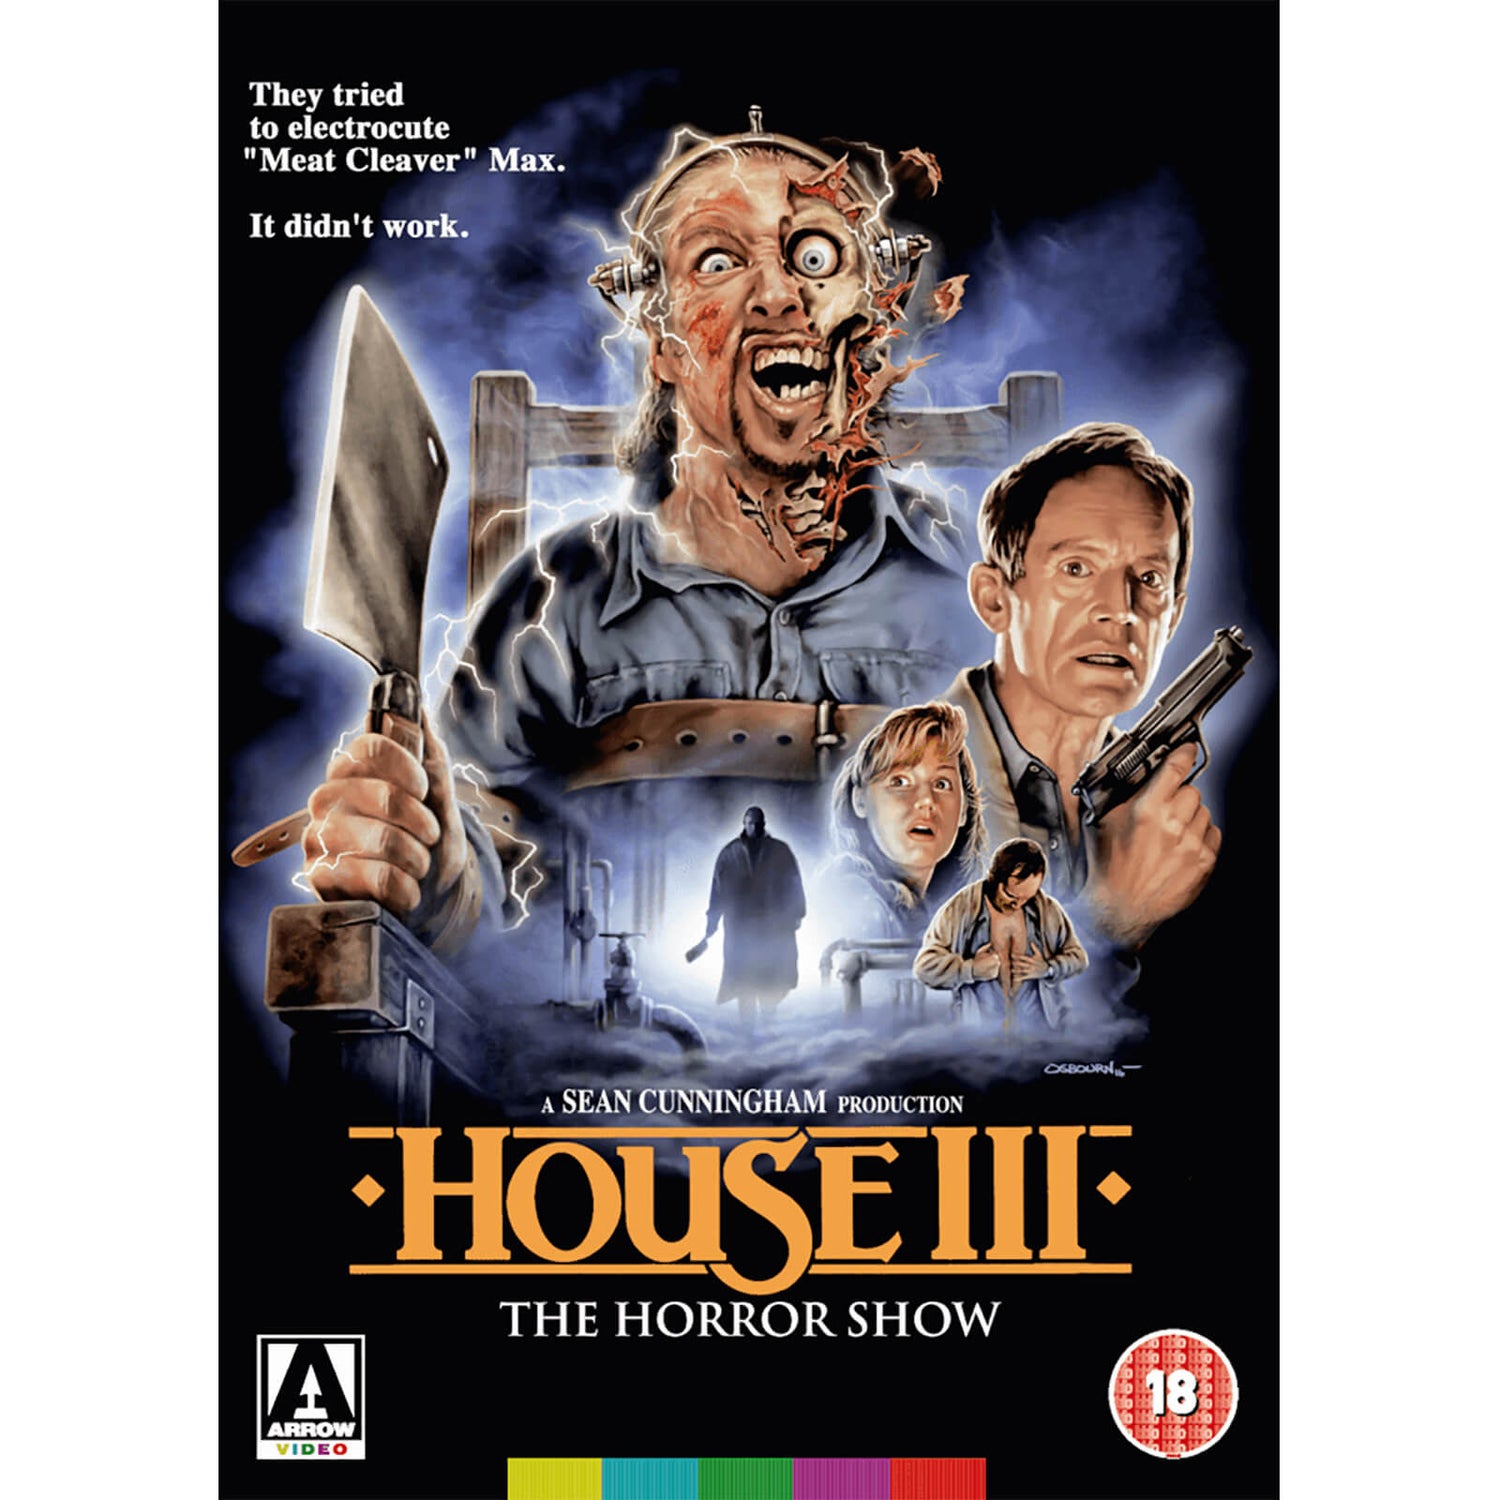 House III: The Horror Show DVD